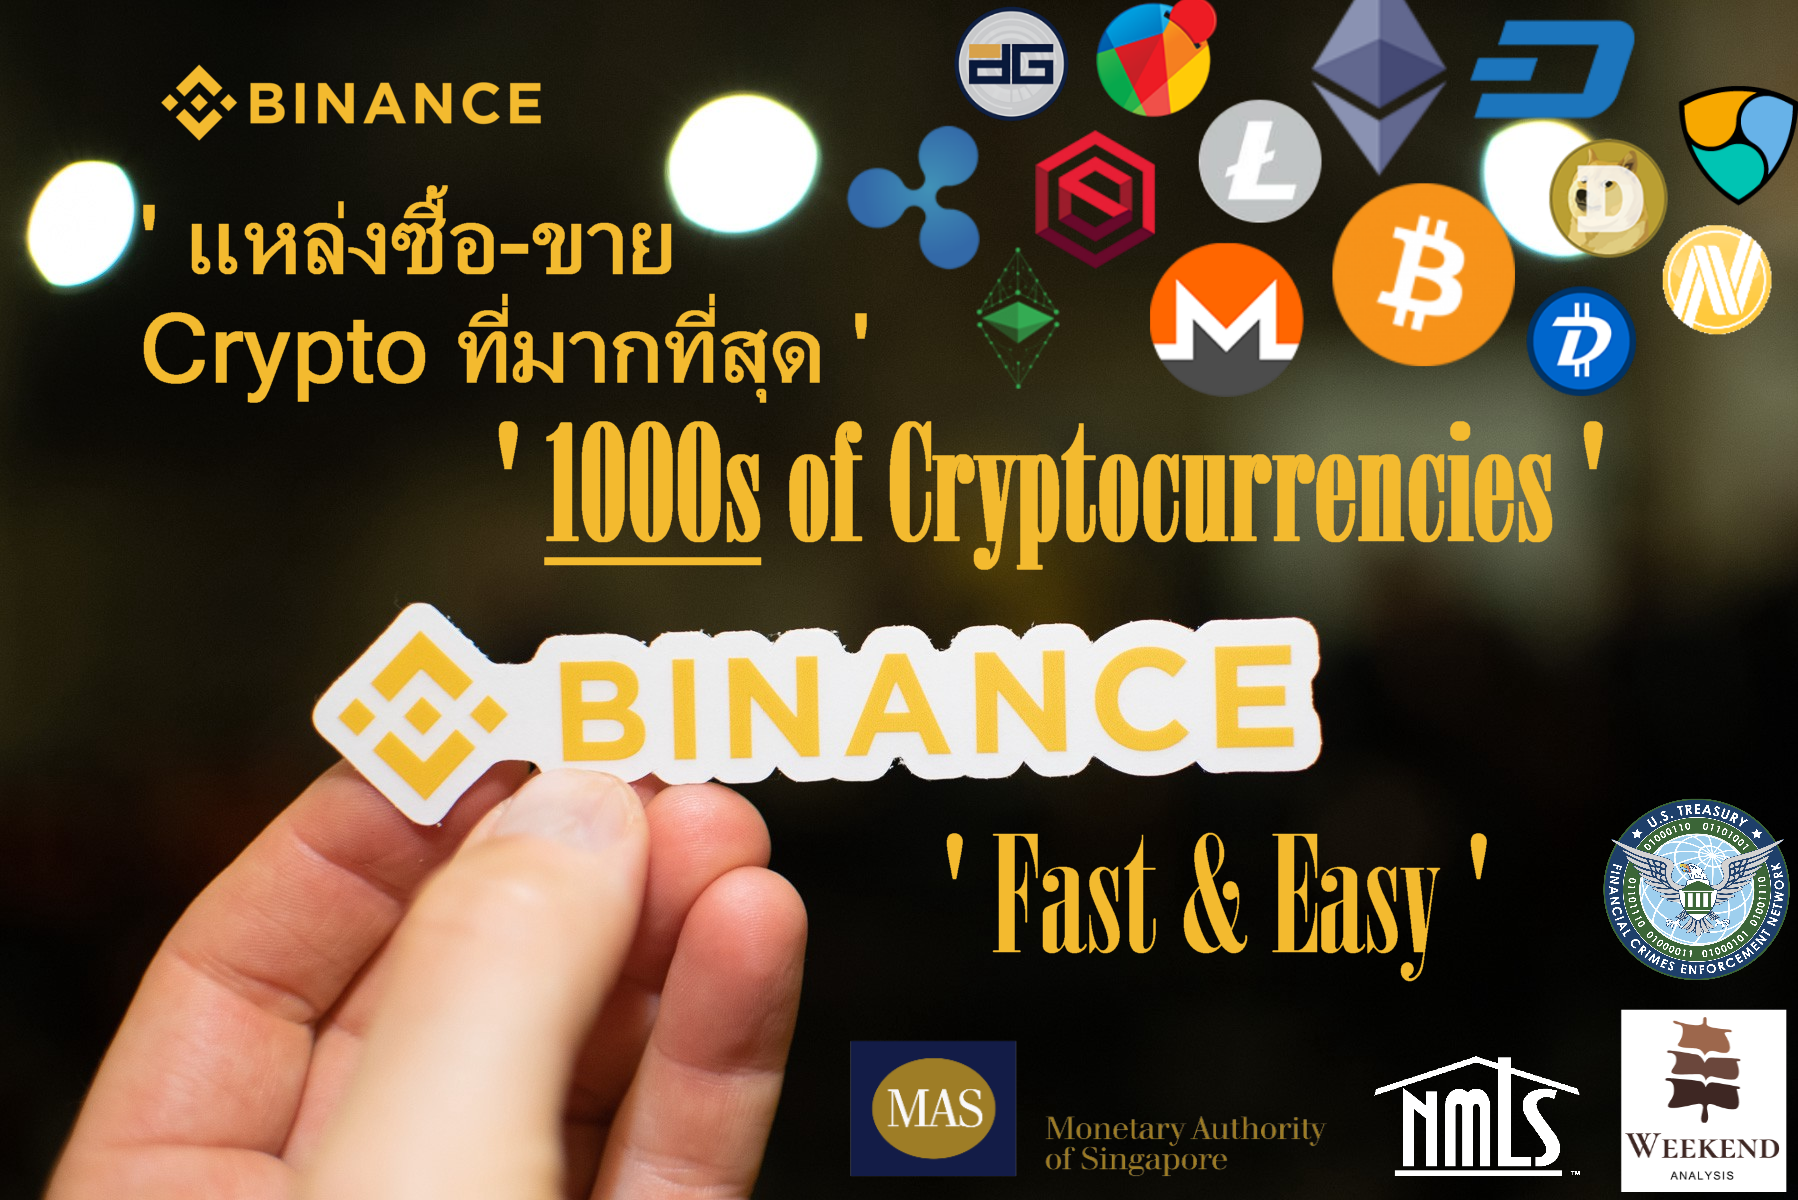  Binance BNB  Cryptocurrency Bitcoin   ...